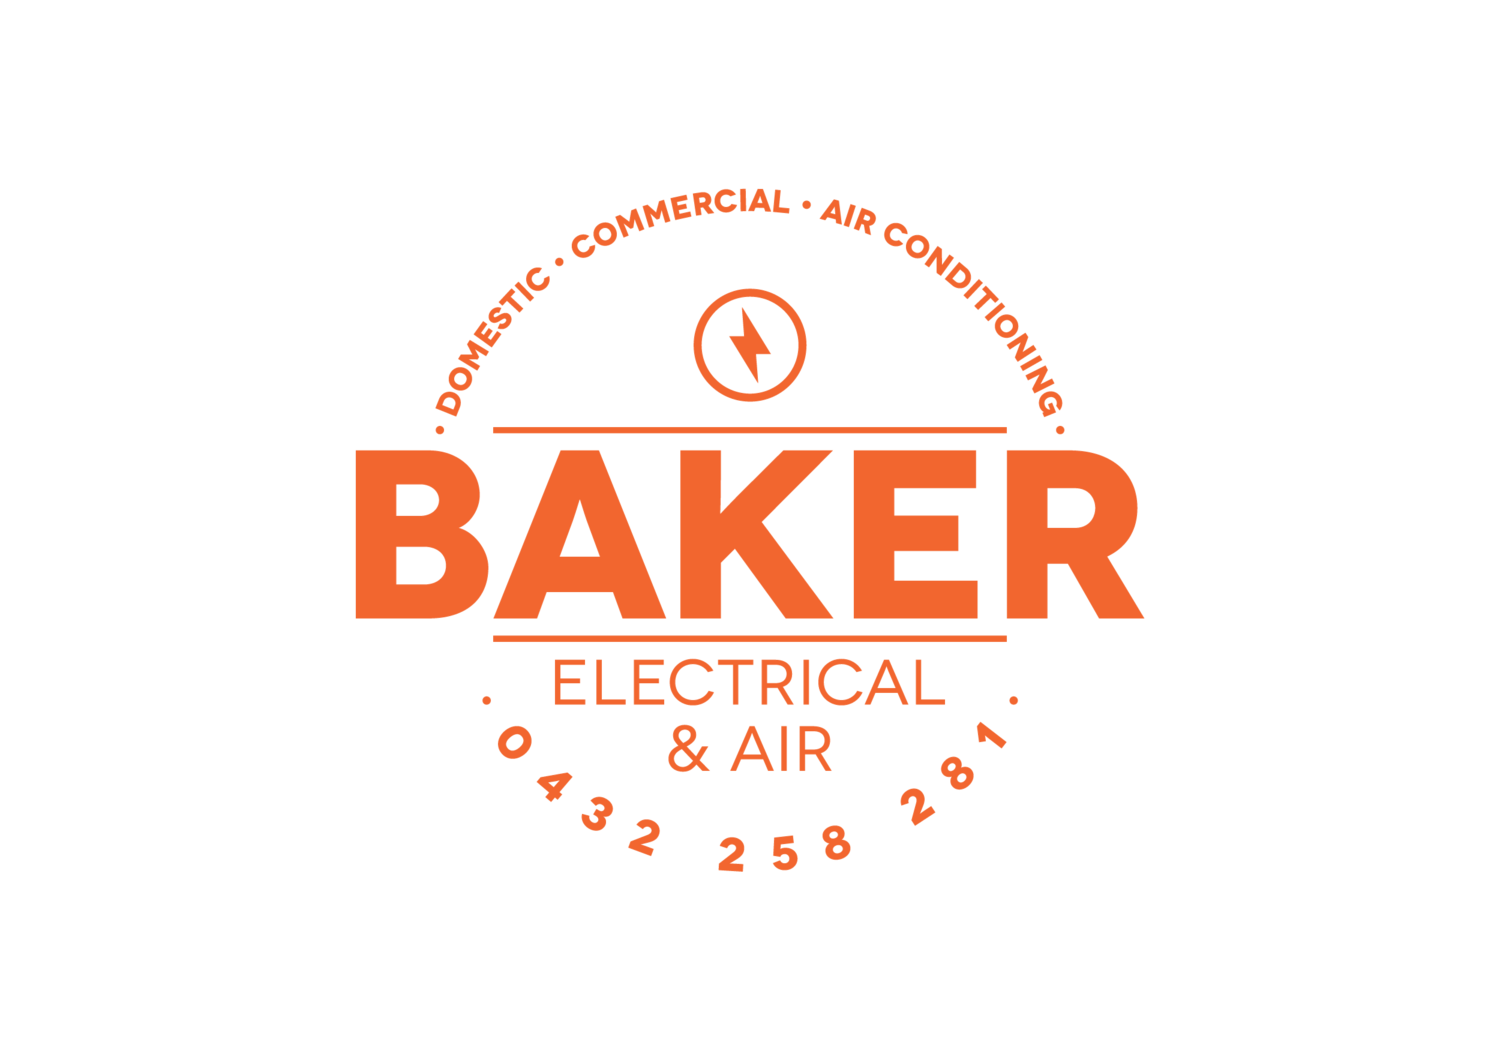  Baker Electrical & Air